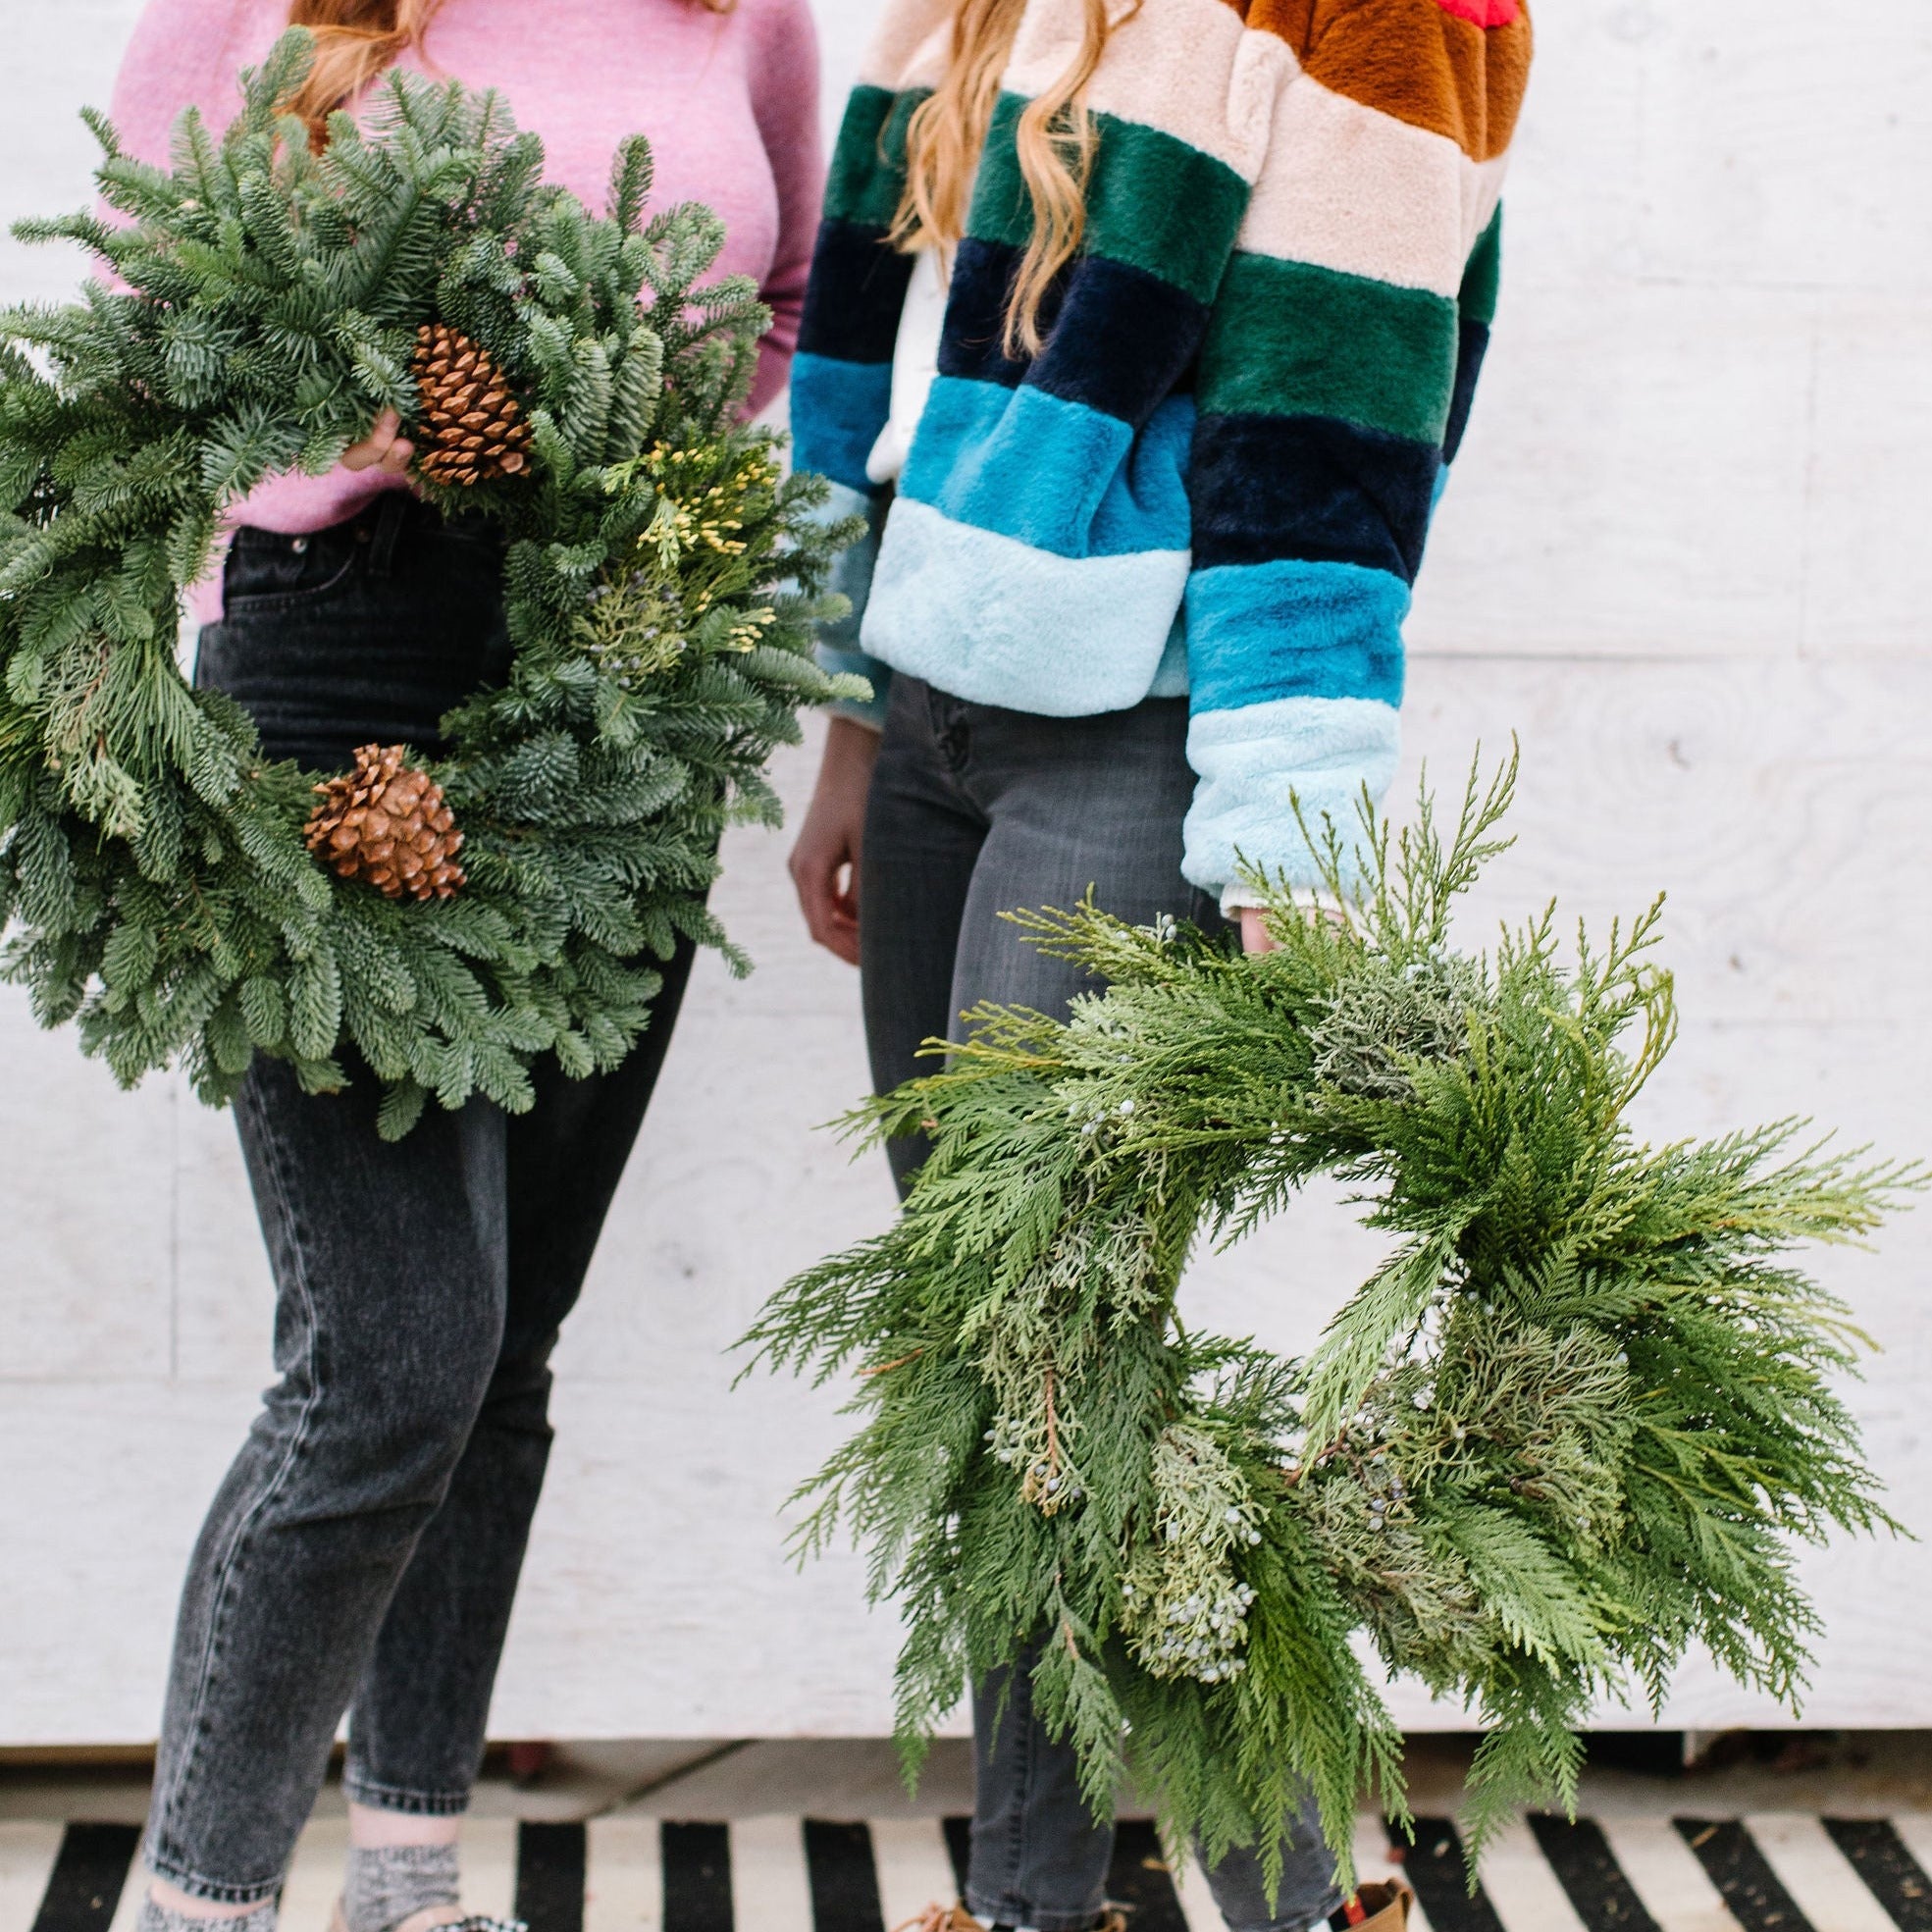 Evergreen Wreath Decorating Workshop- Dec. 2nd